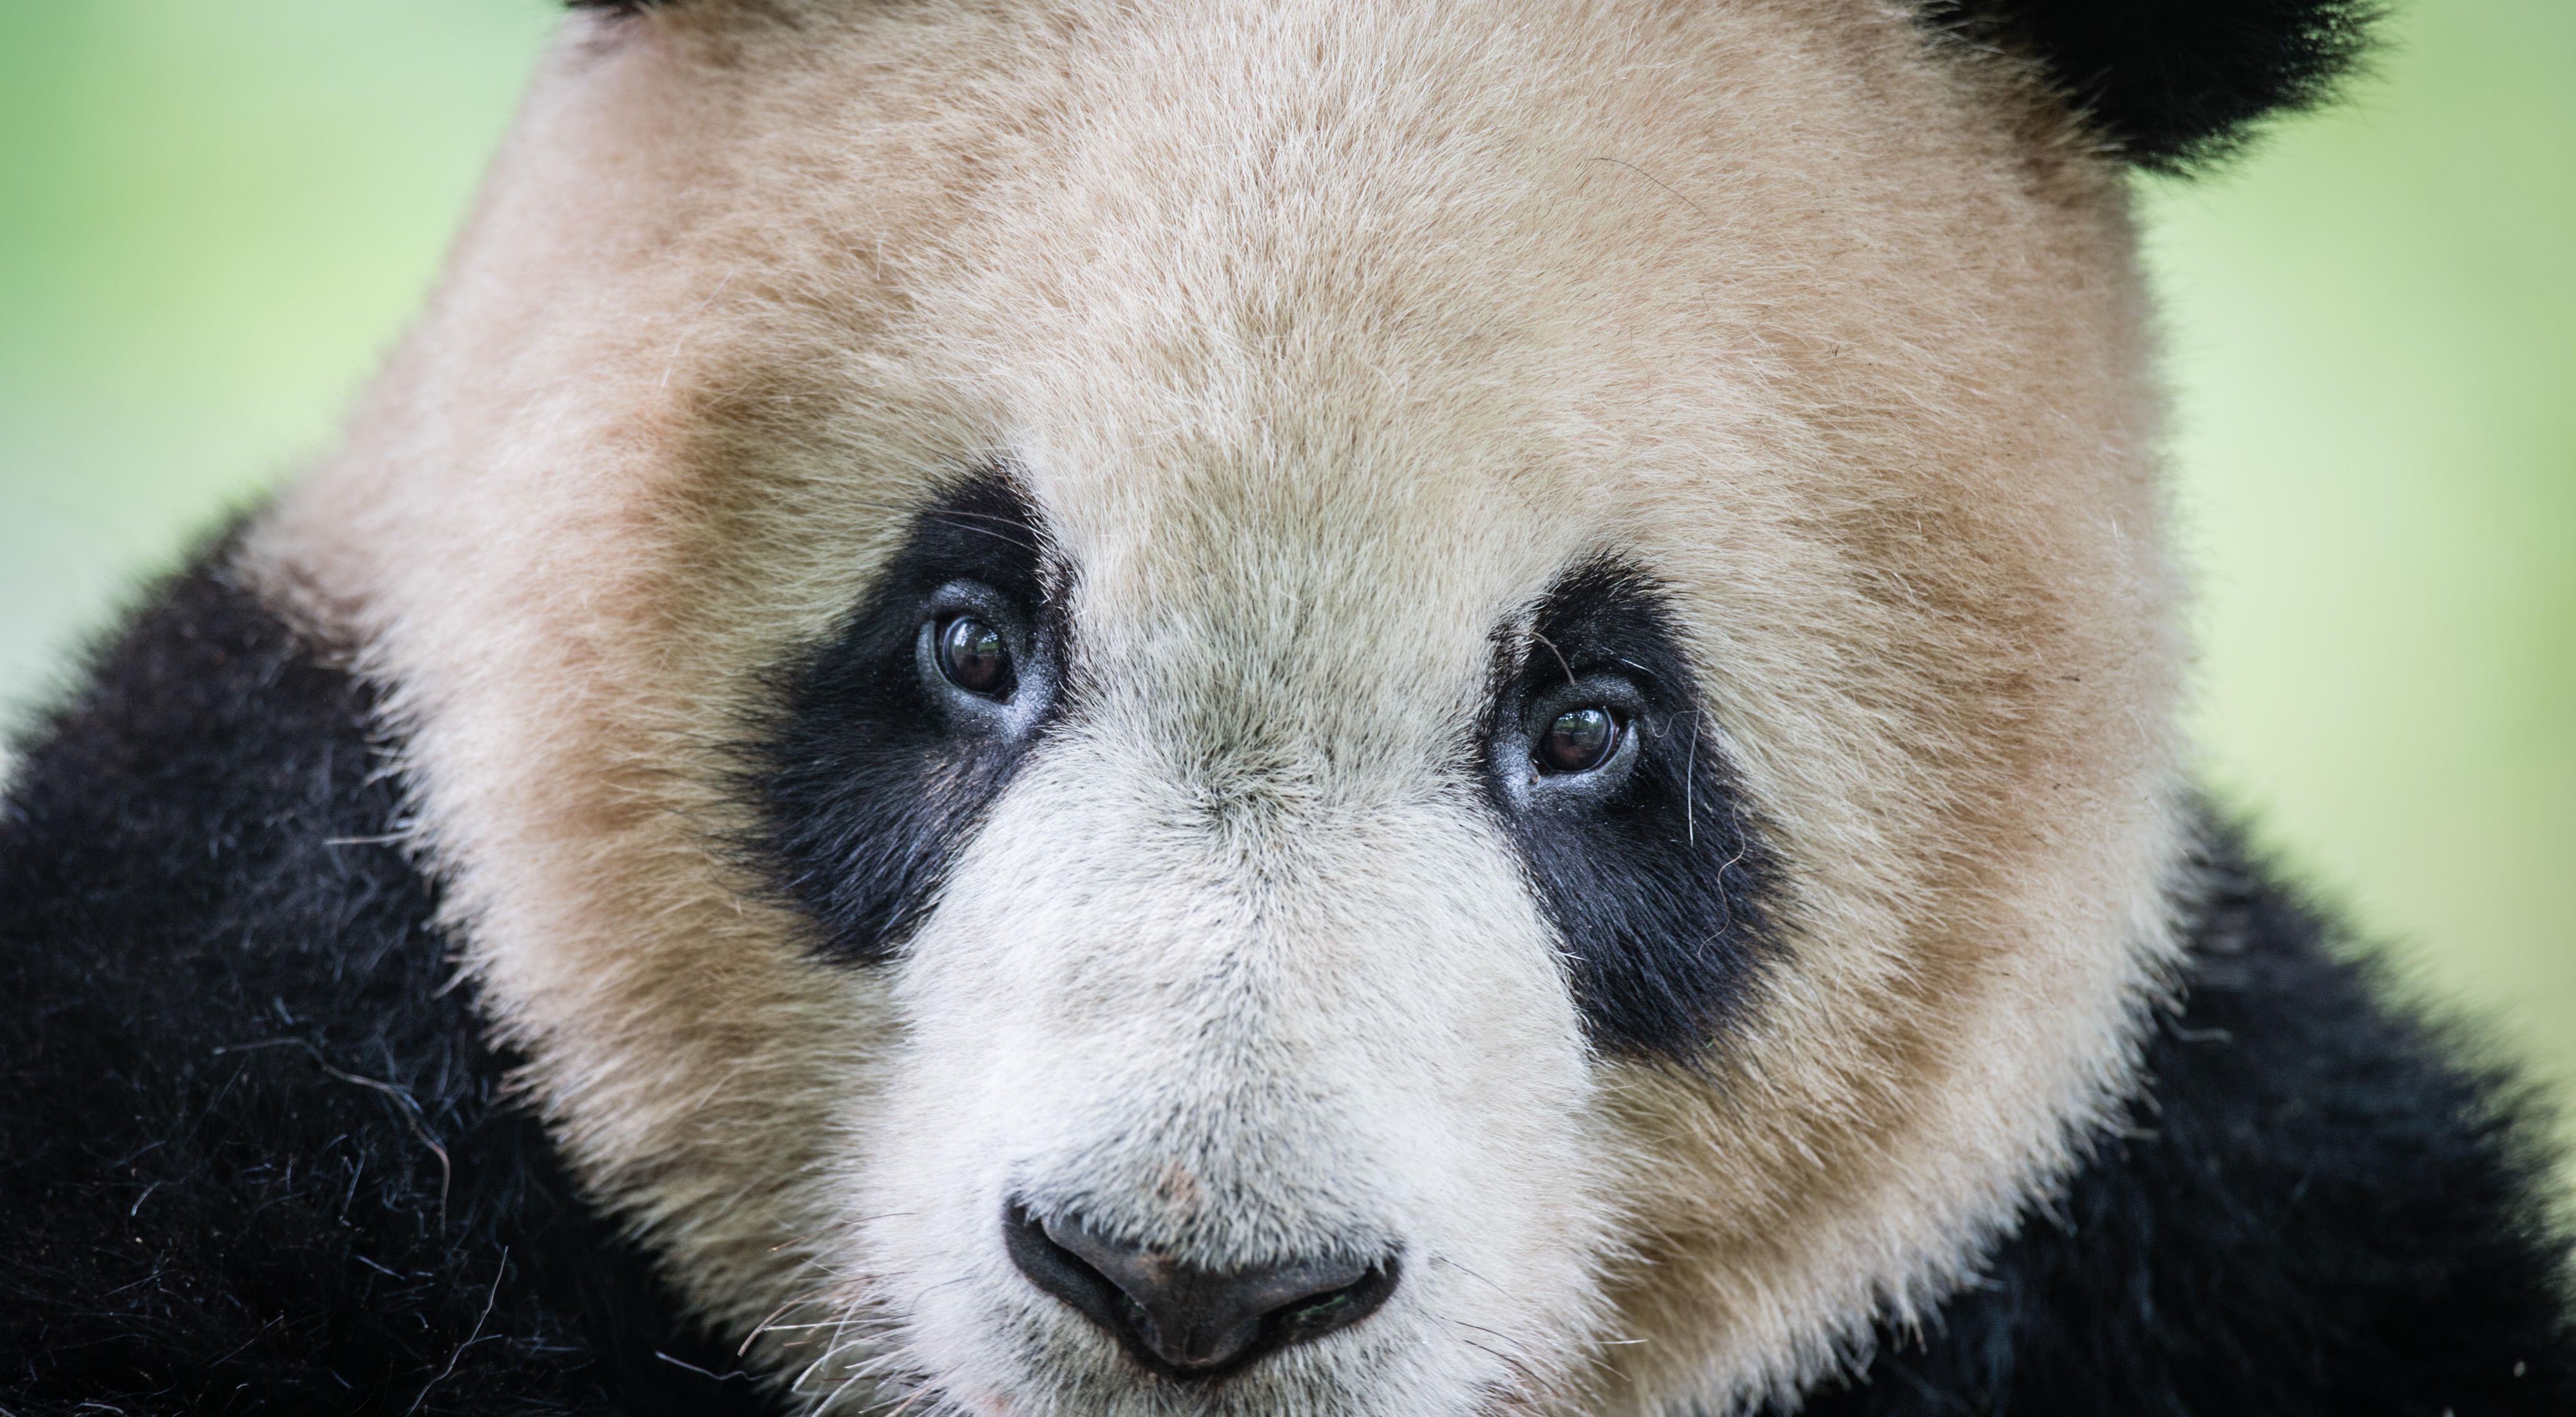 at the Dujiangyan Panda Base outside of Chengdu in Sichuan Province, China.